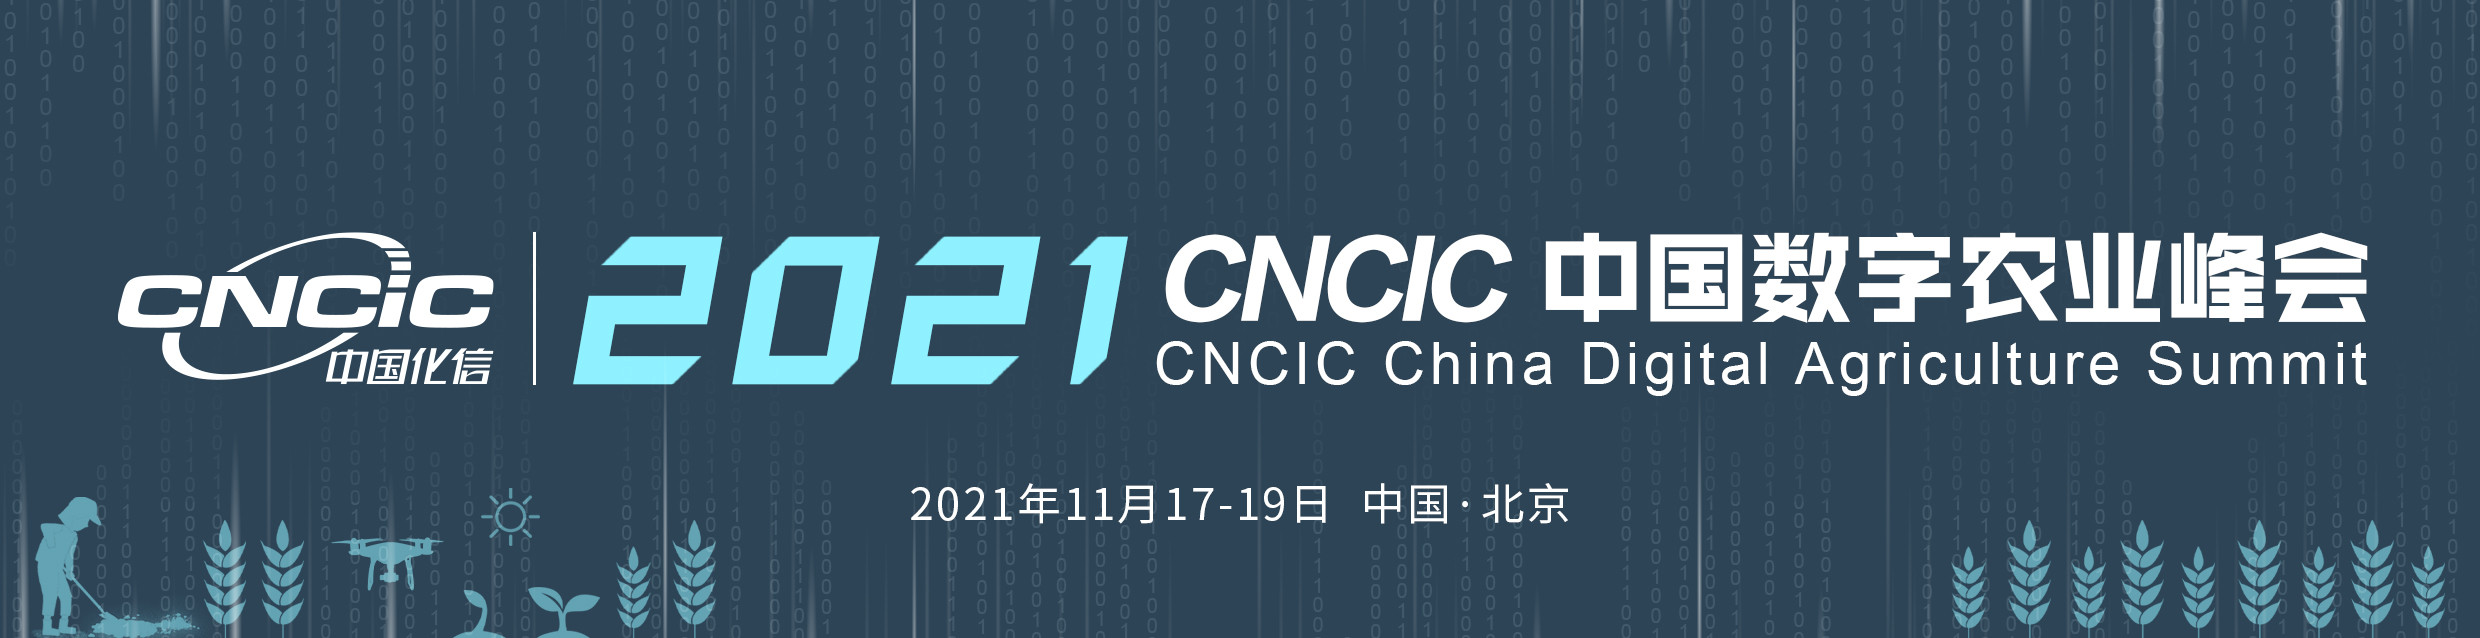 2021CNCIC中國數字農業峰會